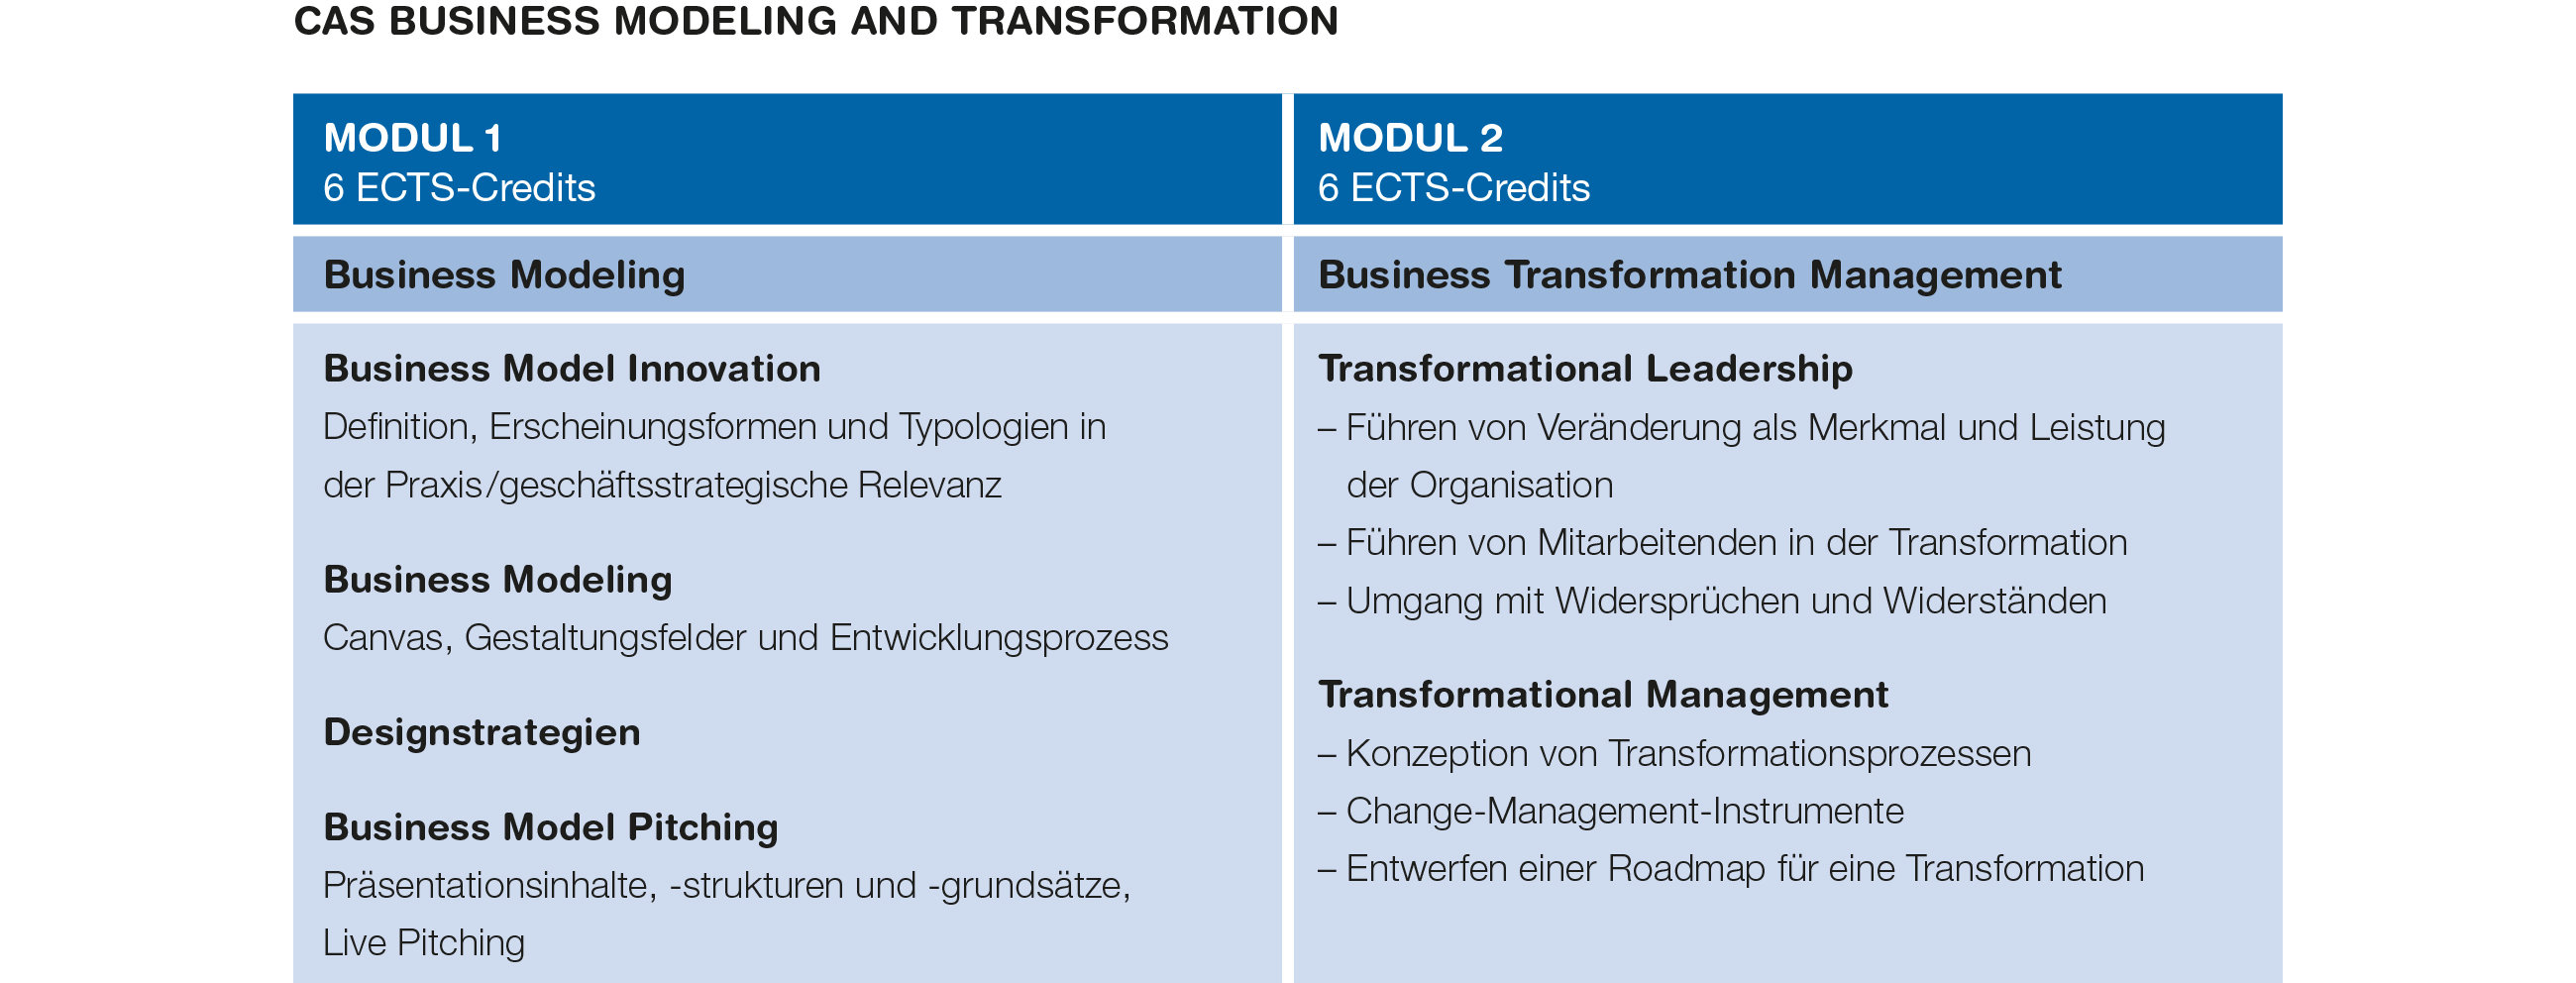 Modulübersicht CAS Business Modeling and Transformation